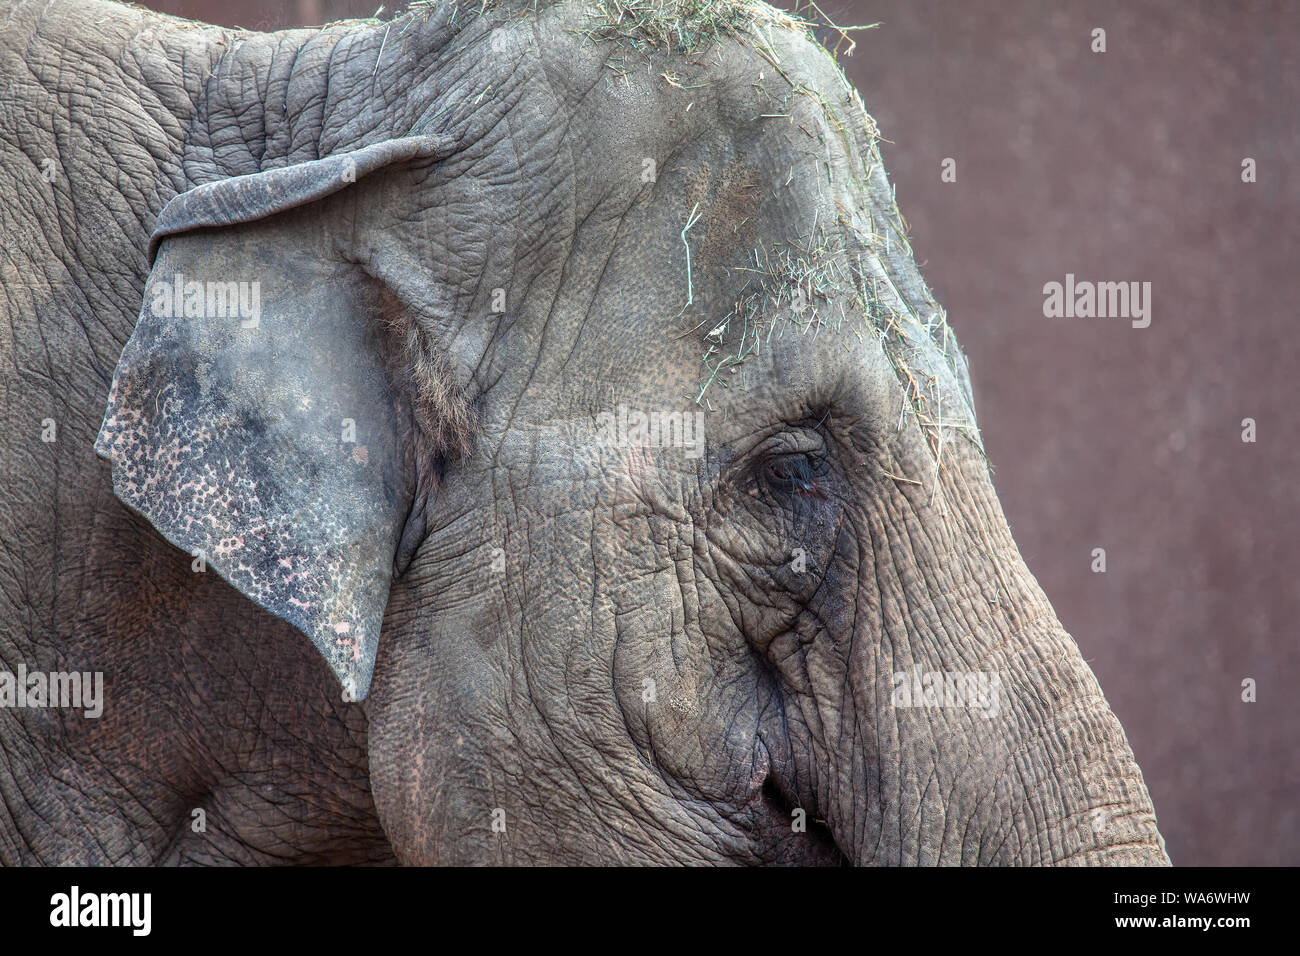 portrait in details of a sad elephant Stock Photo